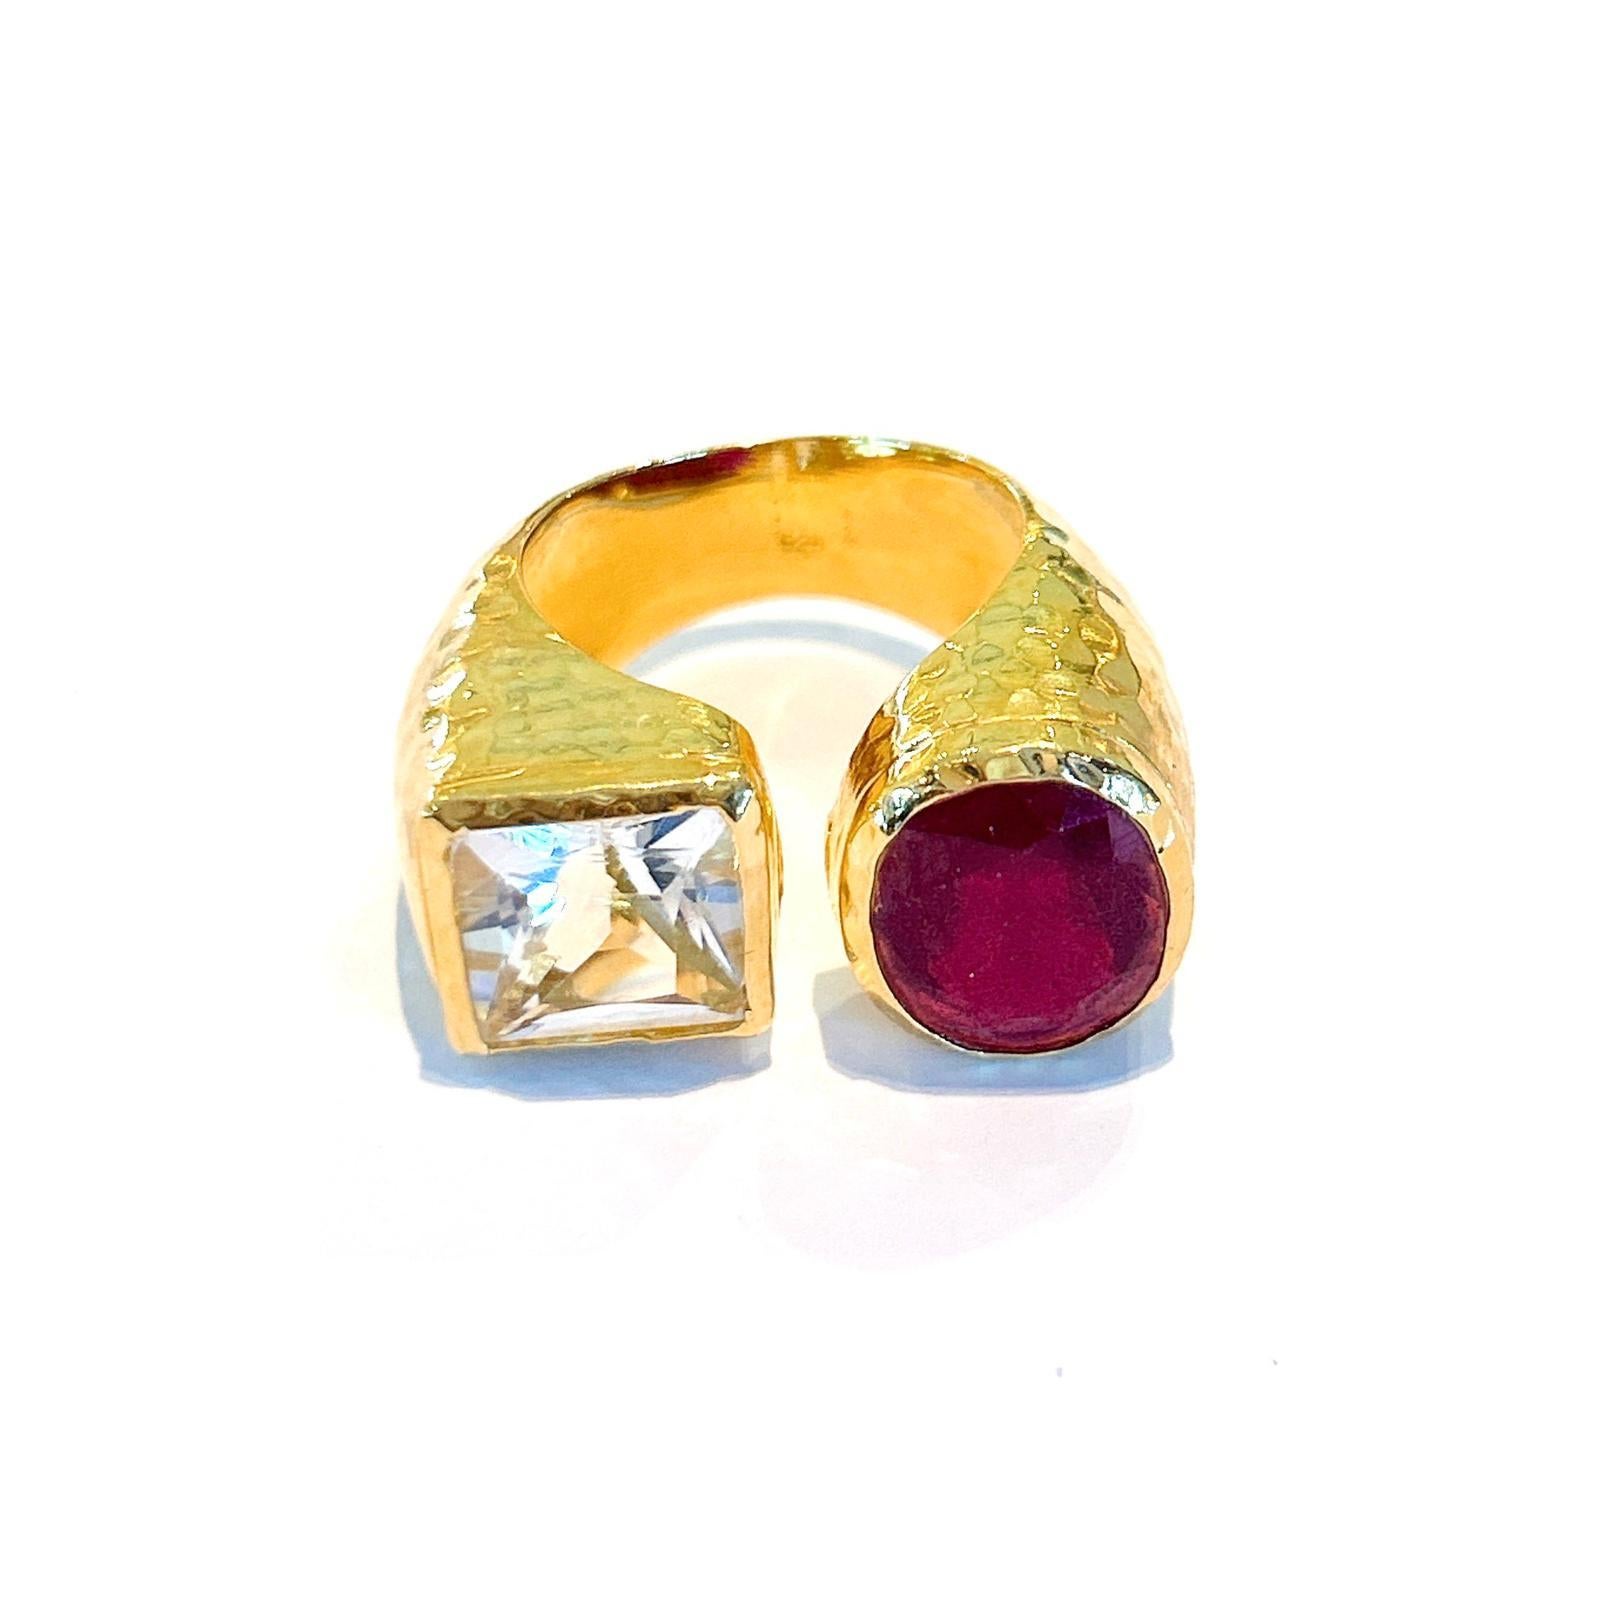 Brilliant Cut Bochic “Capri” Red Ruby & White Topaz Cocktail Ring Set in 22k Gold & Silver